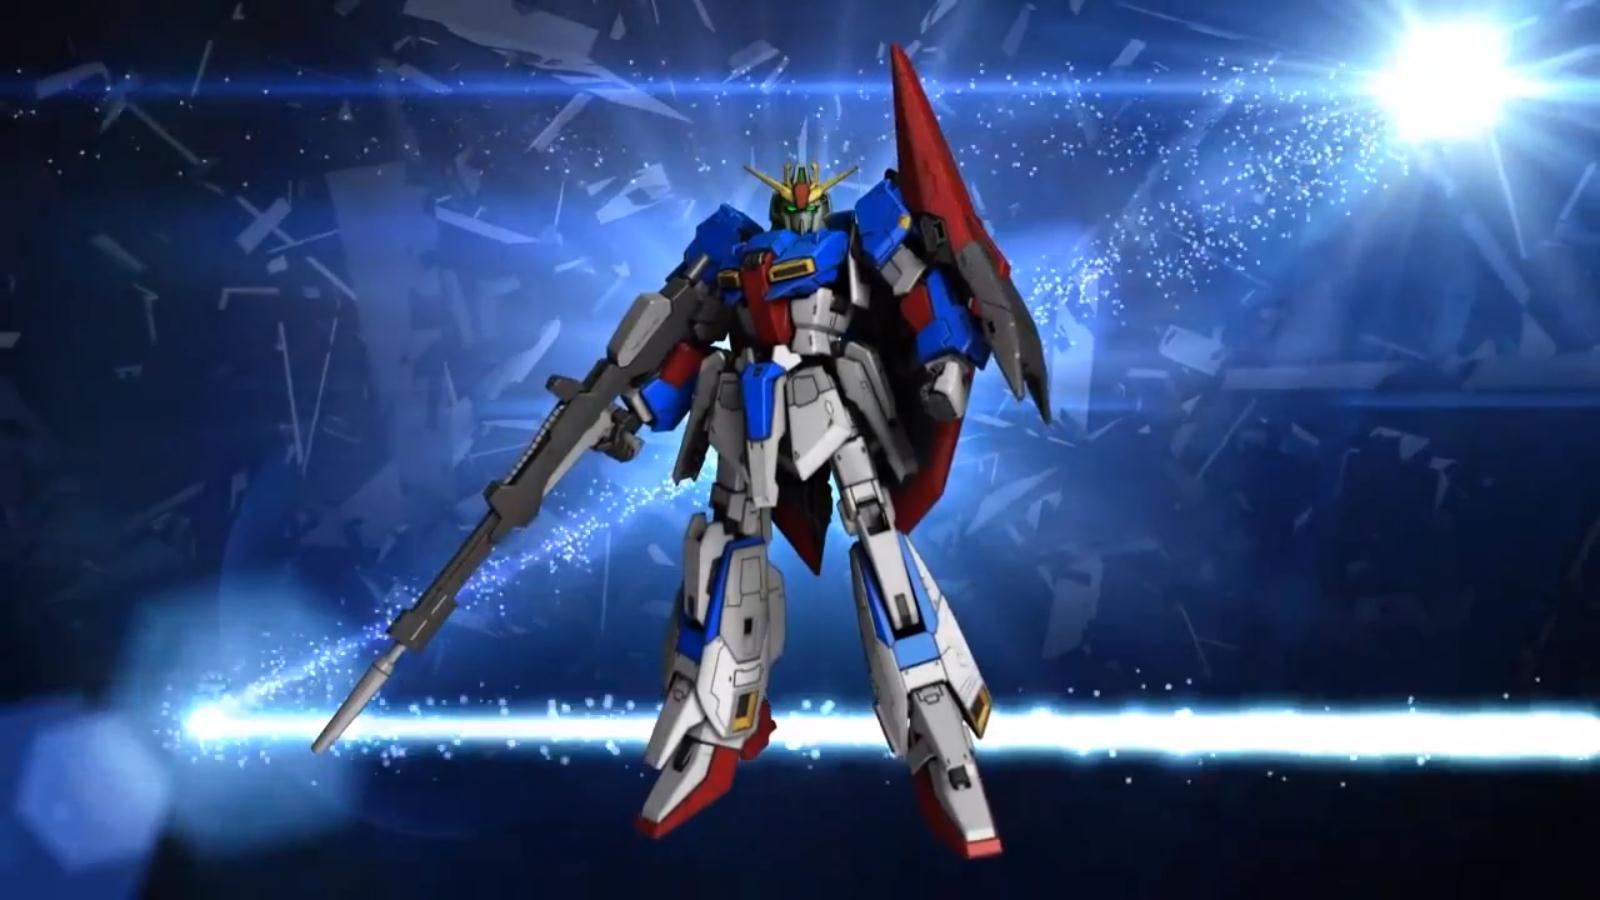 Rg Zeta Gundam Promo Video With Image Kits